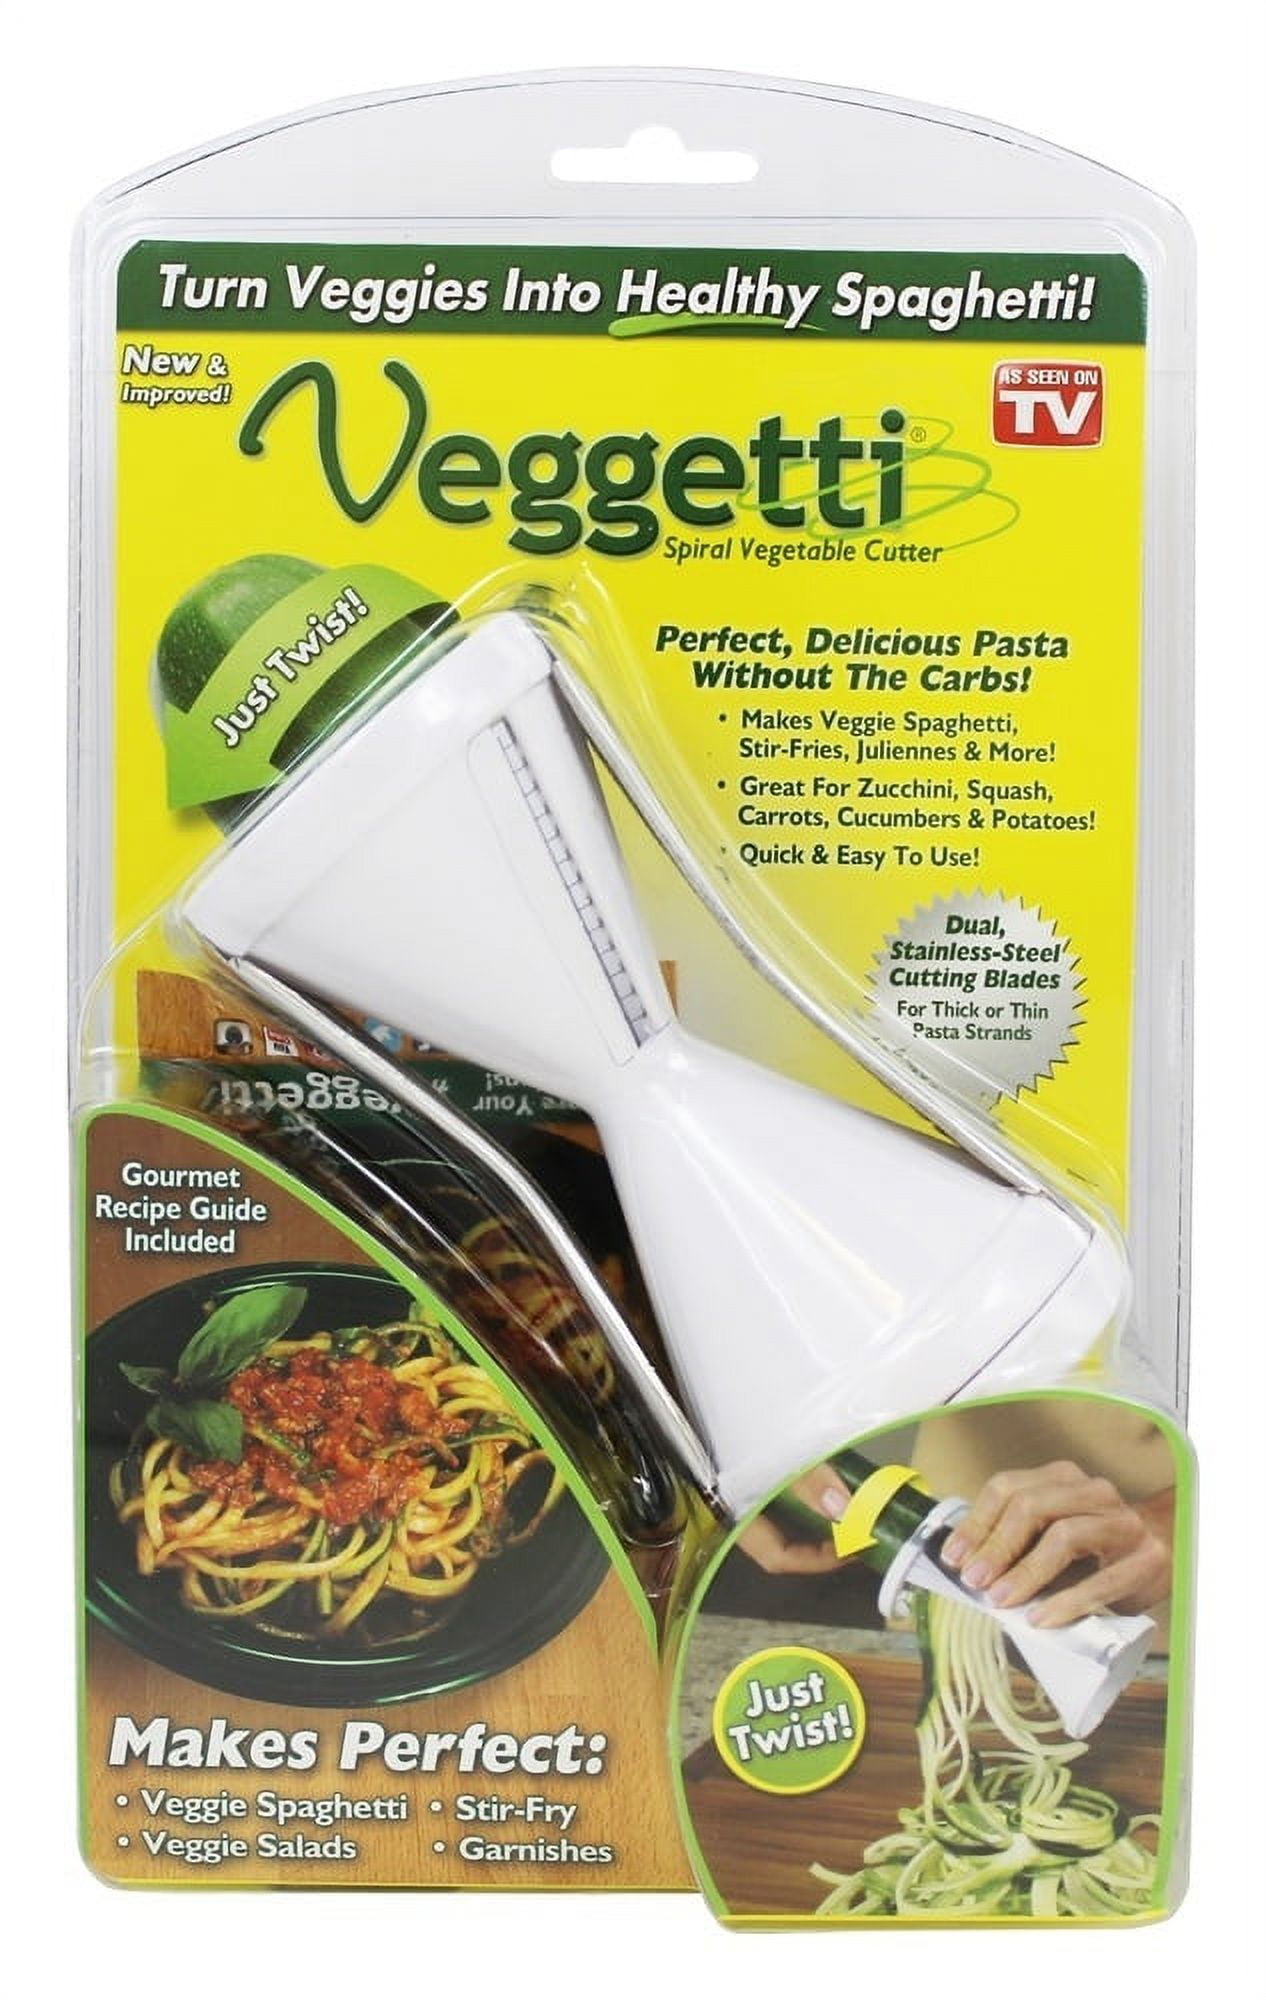 Voaesdk Handheld Spiralizer Vegetable Slicer,4 in 1 Heavy Duty